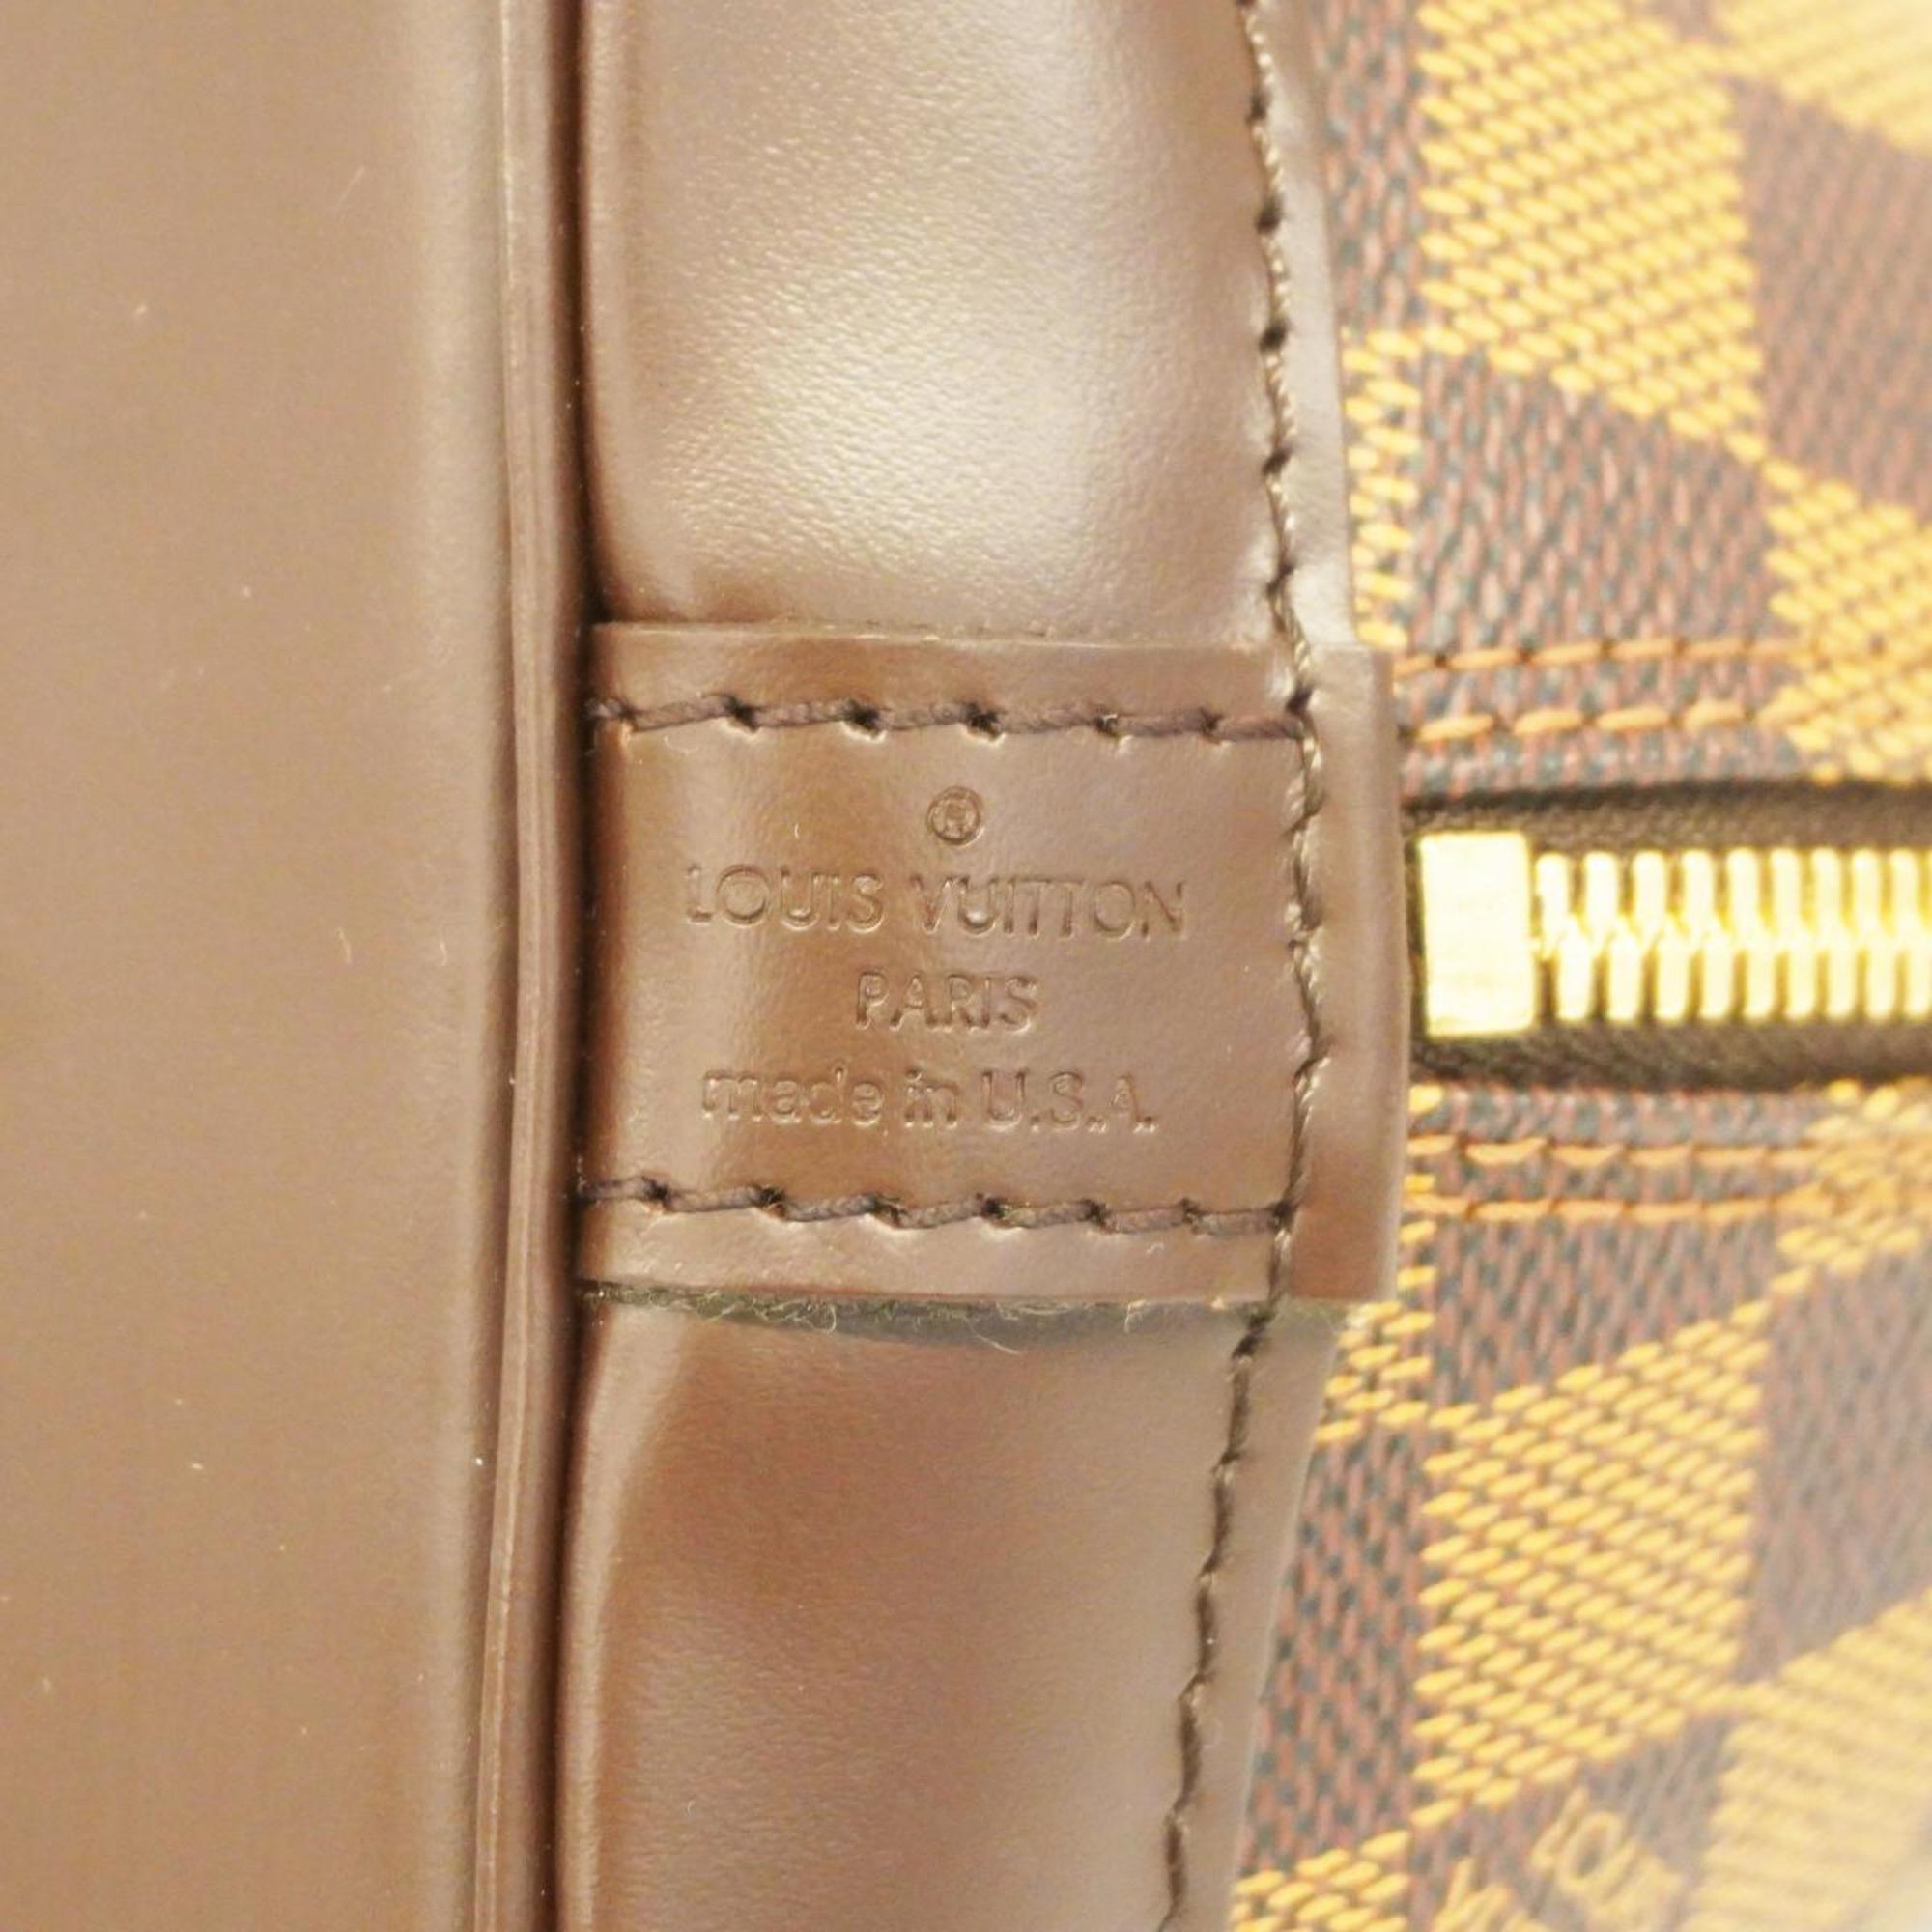 Louis Vuitton Handbag Damier Alma N53151 Ebene Ladies